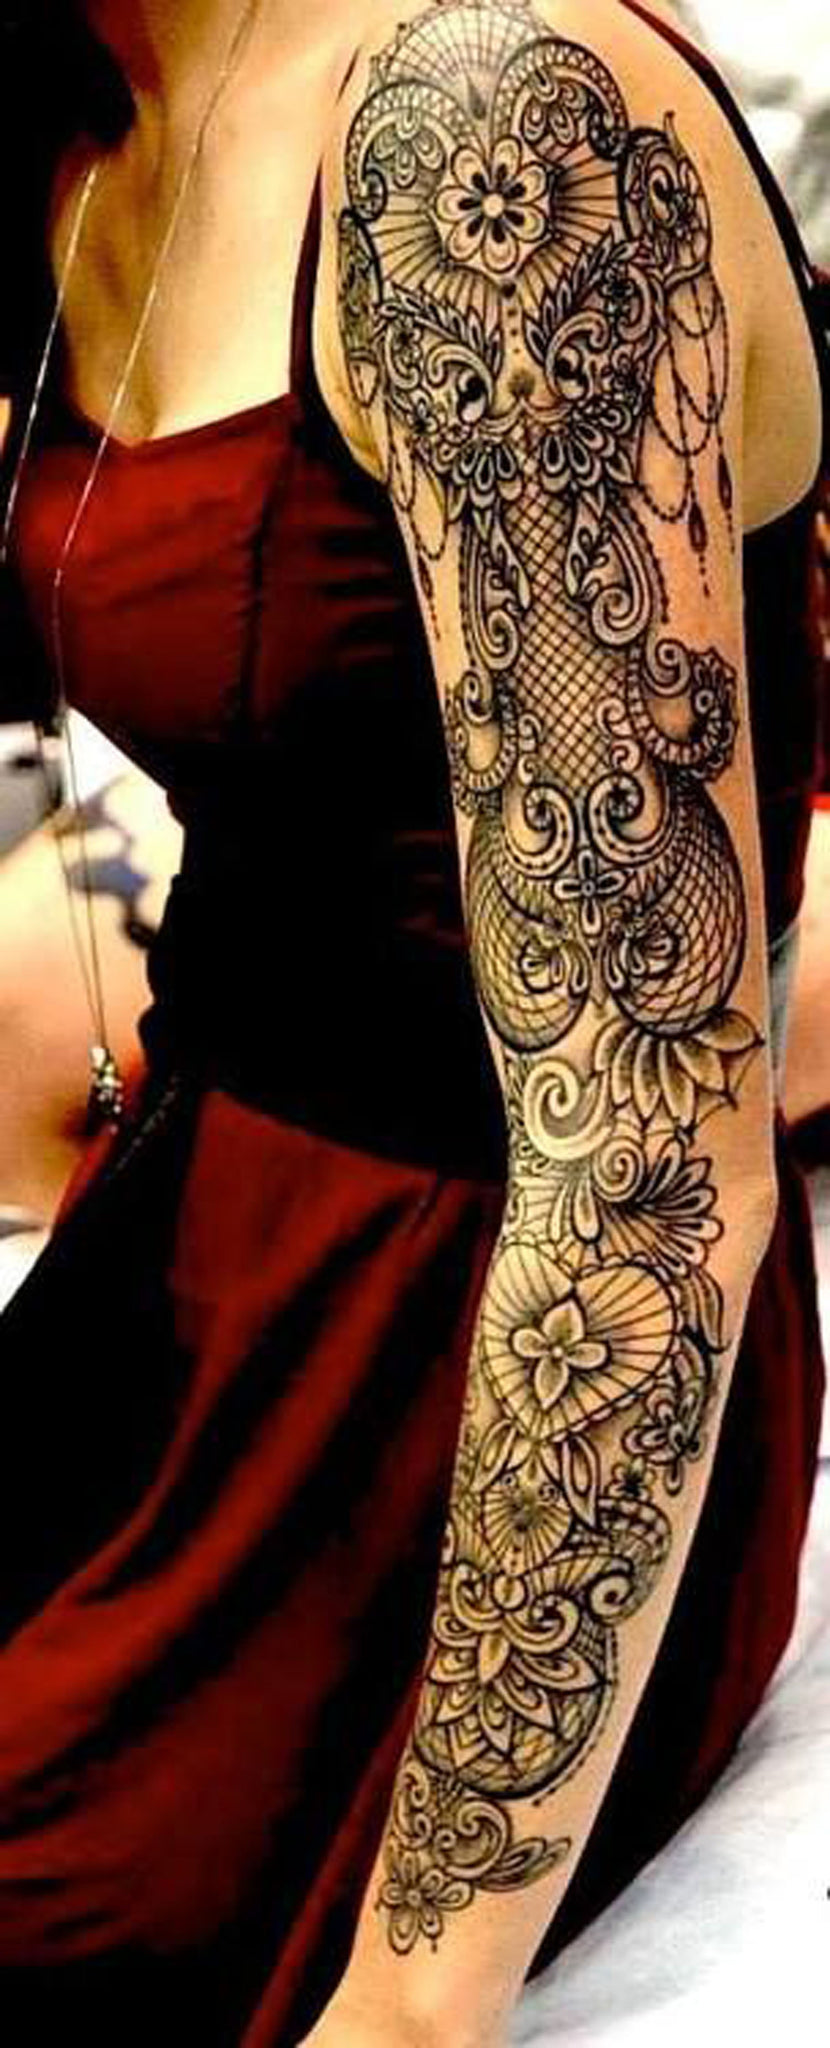 Black Lotus Lace Full Arm Sleeve Tattoo Ideas at MyBodiArt.com